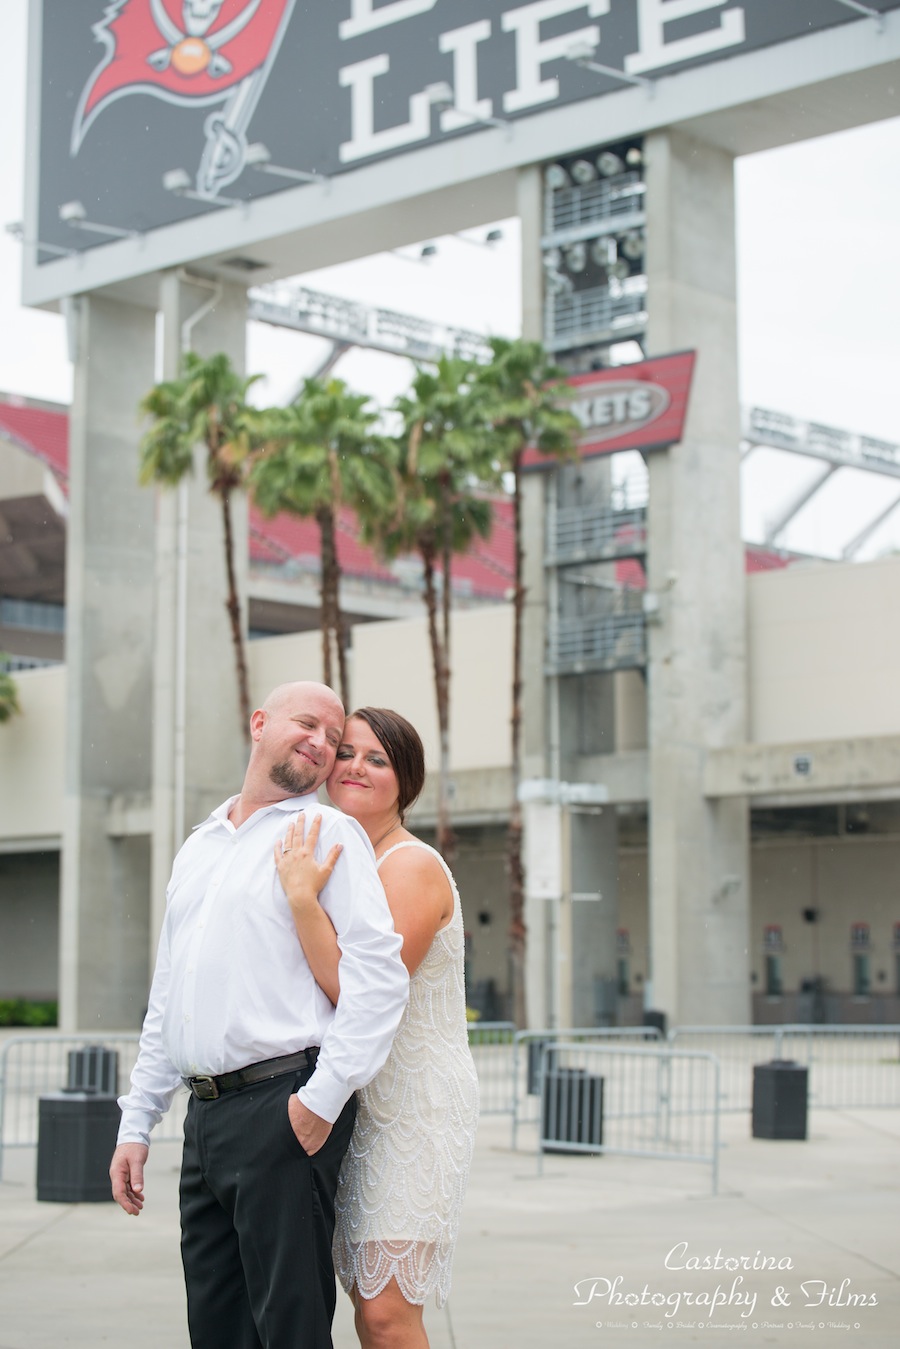 Tampa Bay Buccaneers Engagement Session at Raymond James Stadium | Tampa Wedding Photographer Castorina Photography